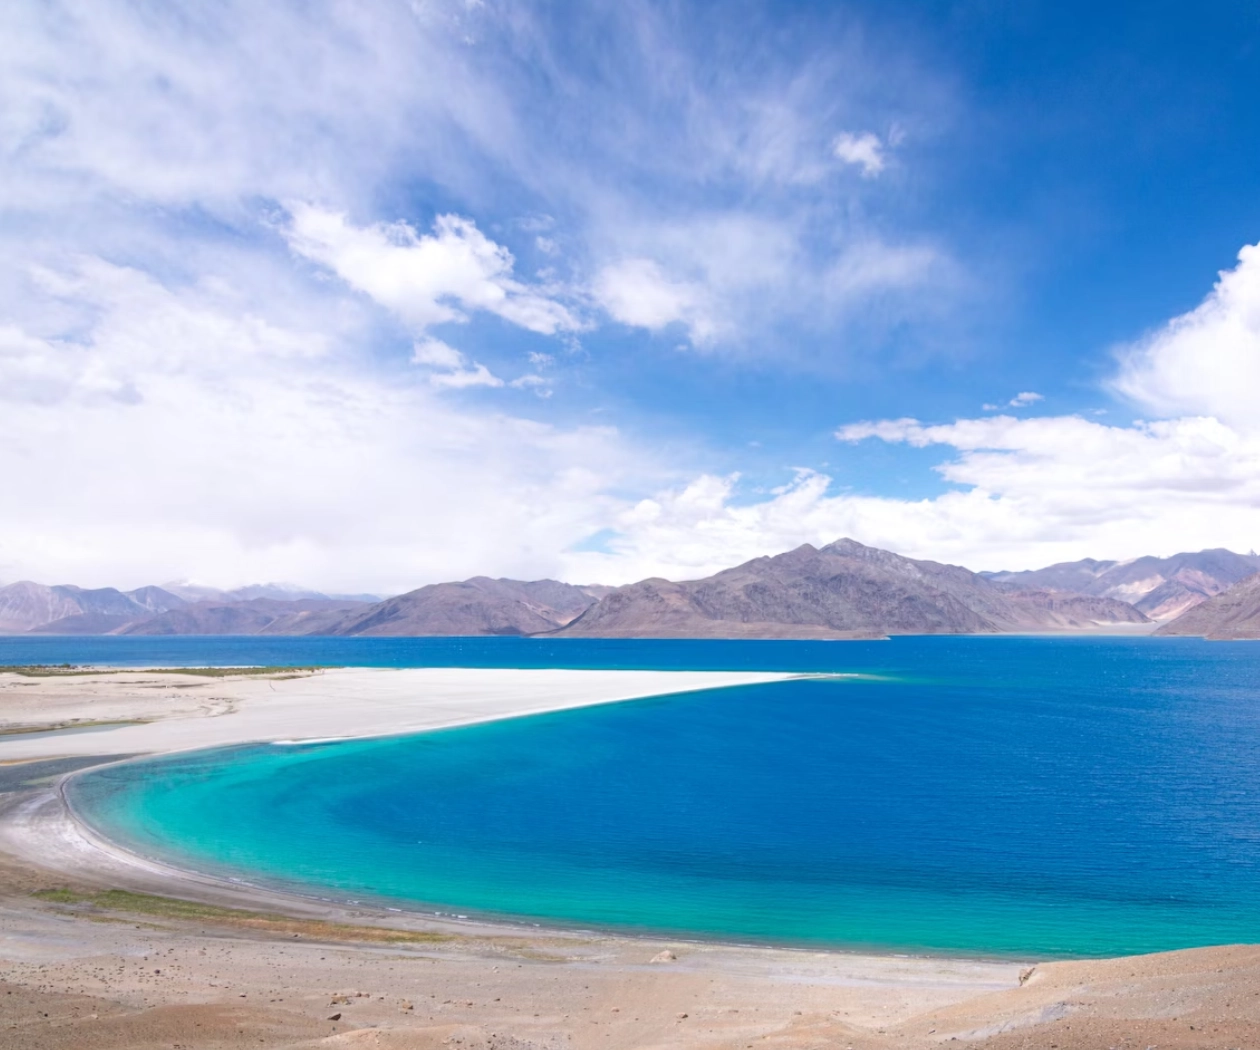 Pangong lake, Ladakh unveiled